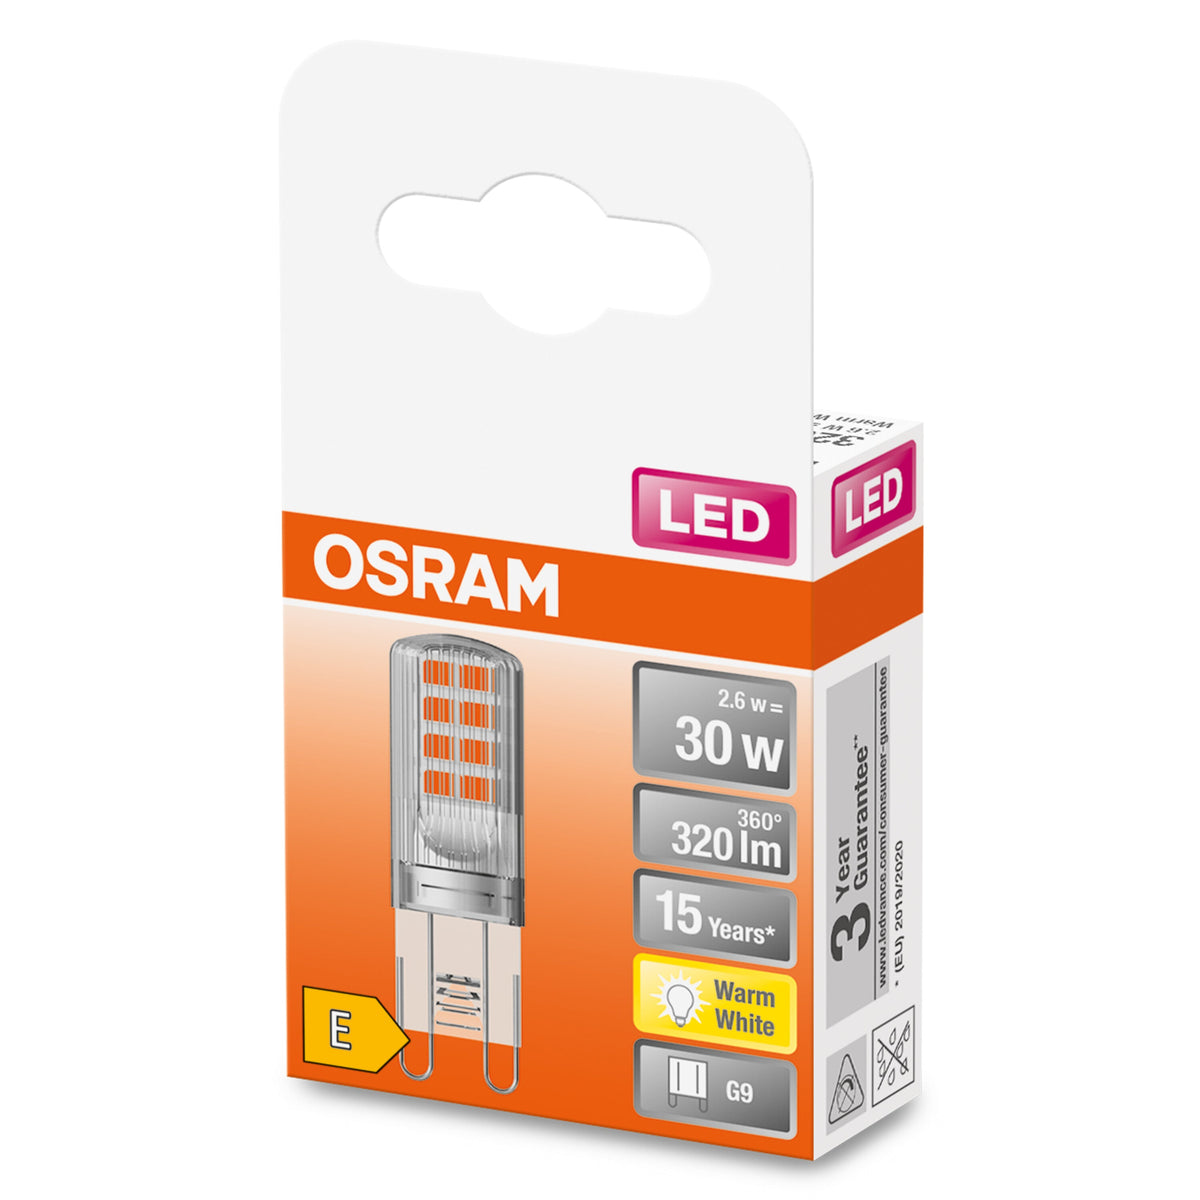 OSRAM LED Lampe à culot enfichable Lampe LED (ex 30W) 2,6W / 2700K blanc chaud PIN G9